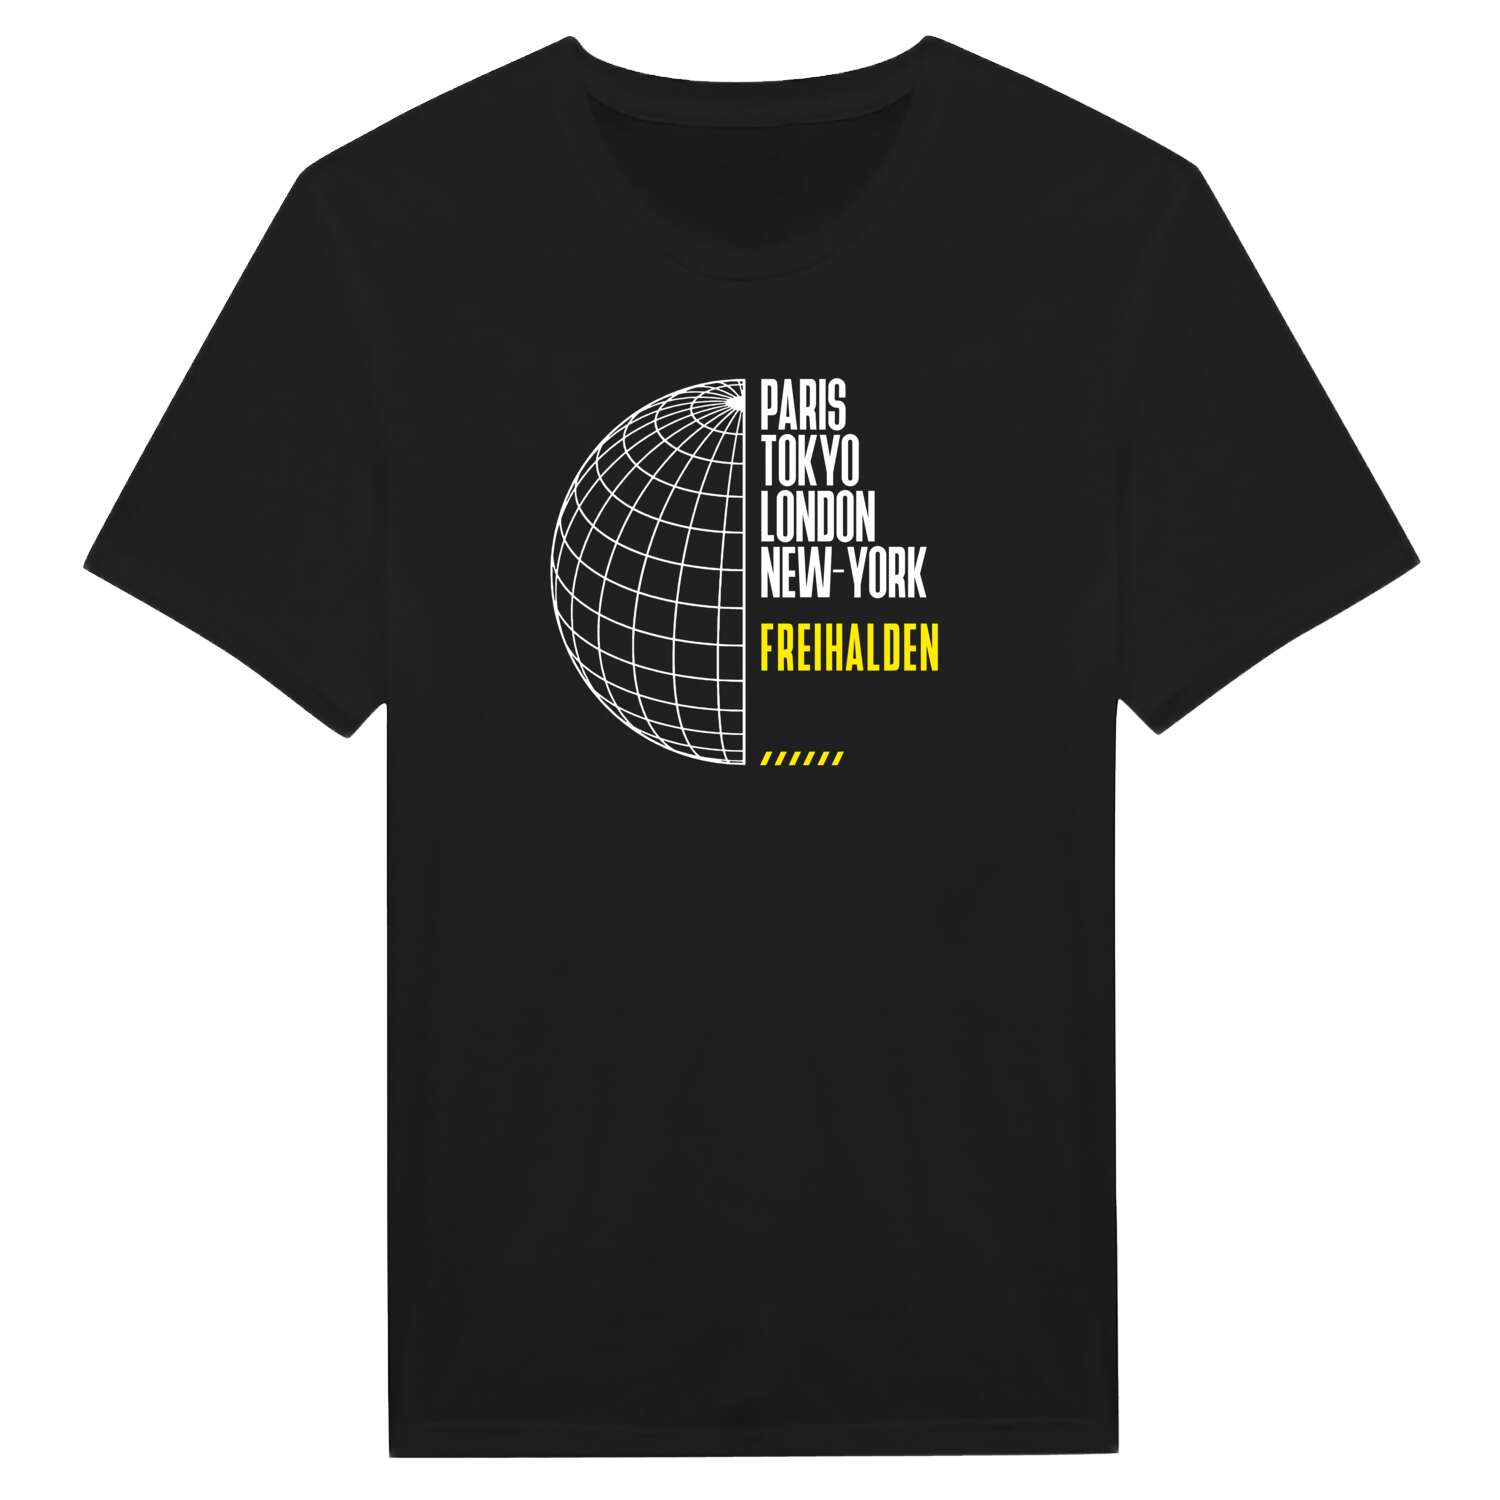 Freihalden T-Shirt »Paris Tokyo London«